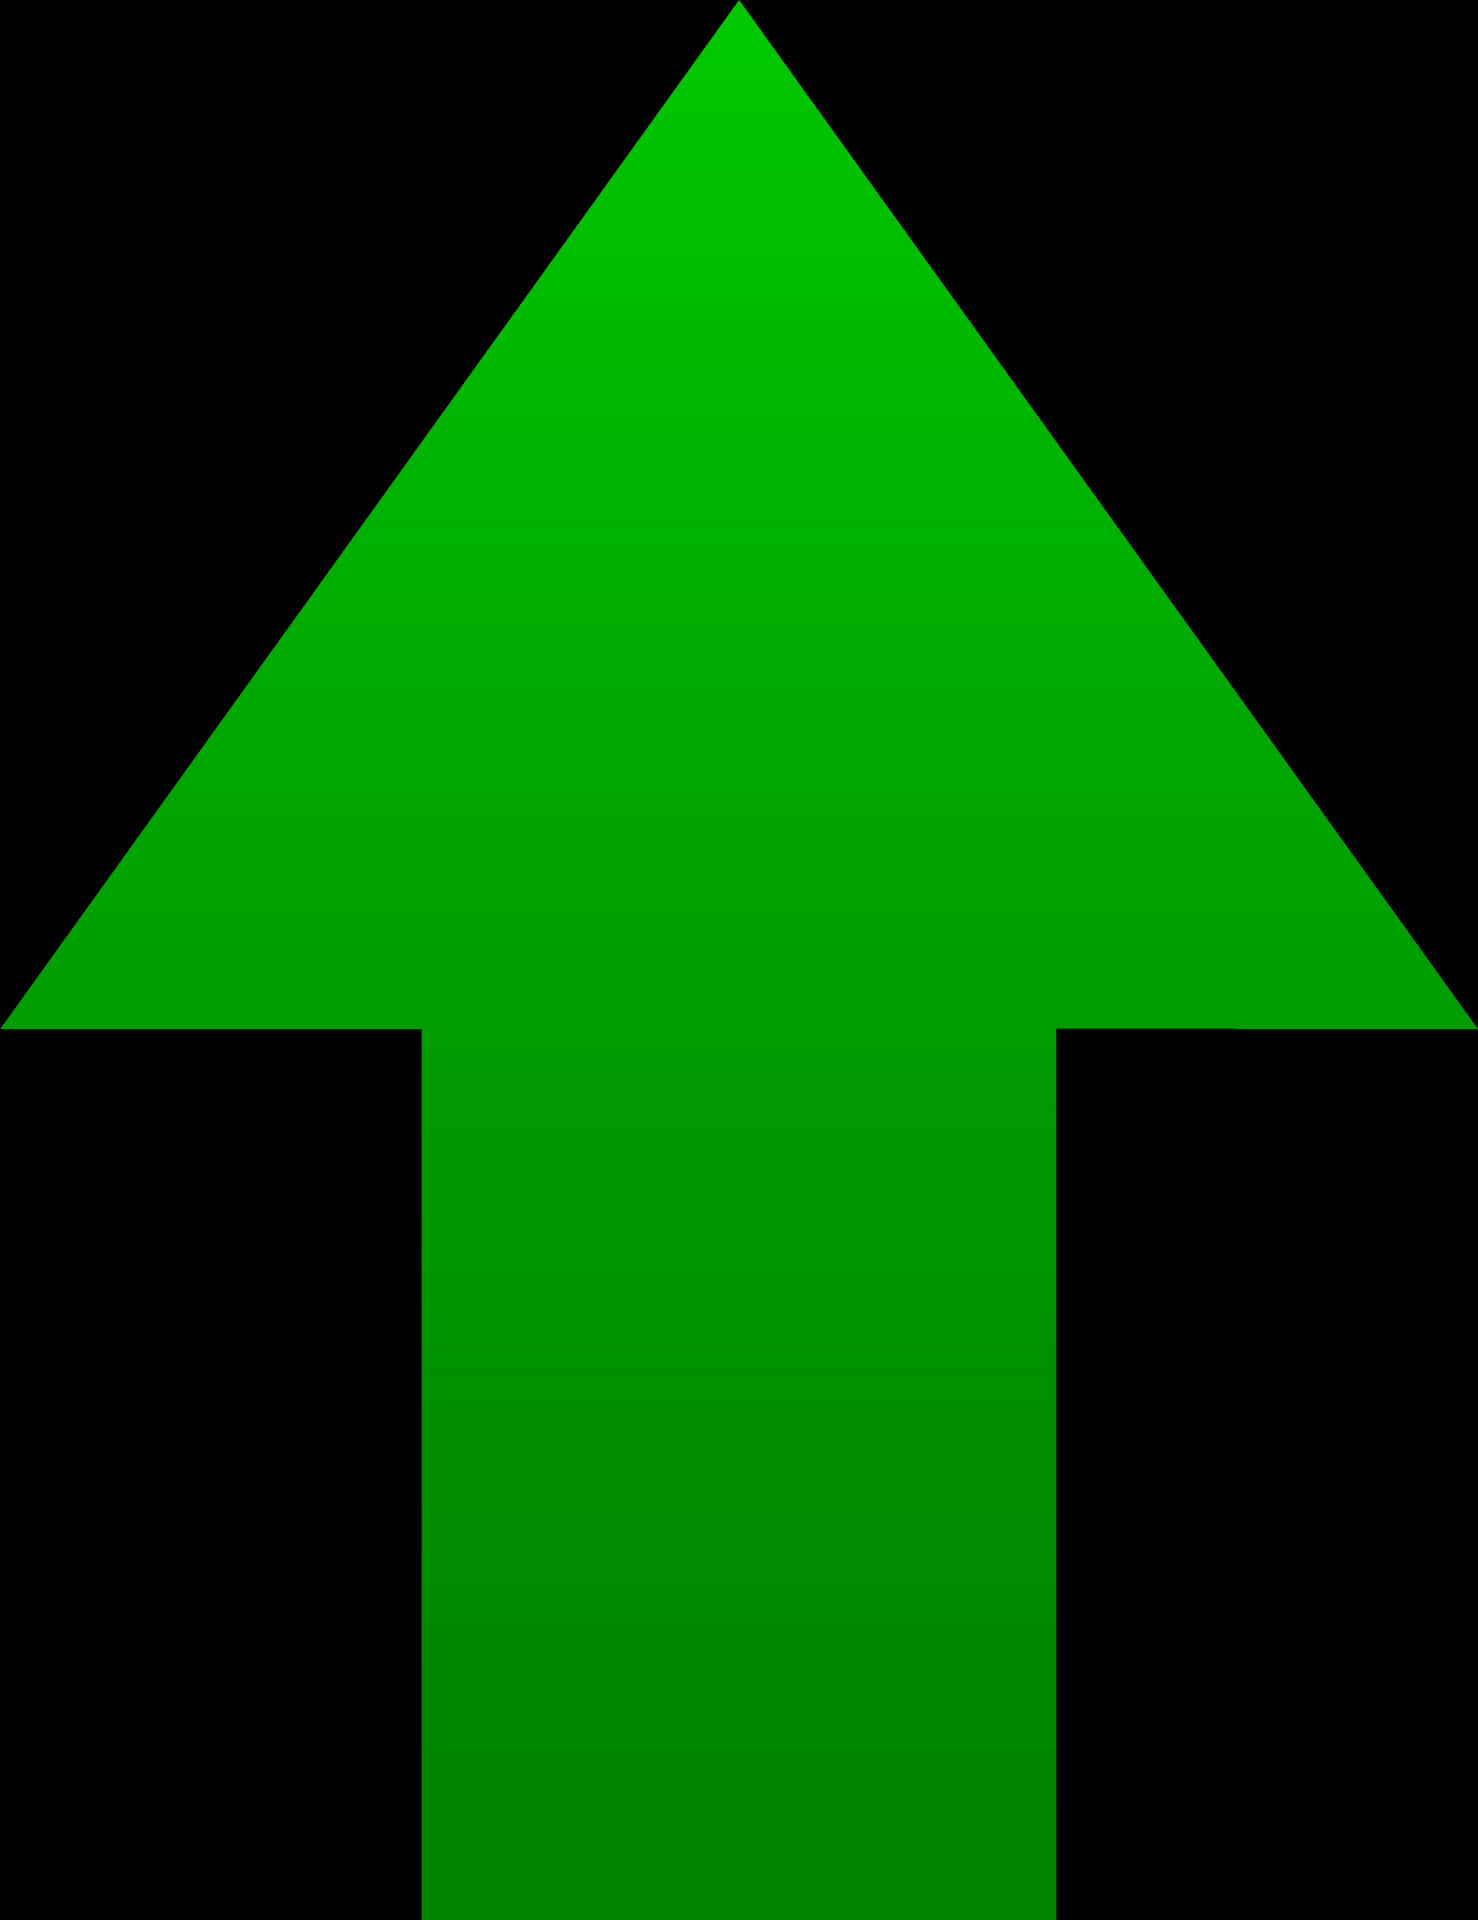 Green Upward Arrow Graphic PNG